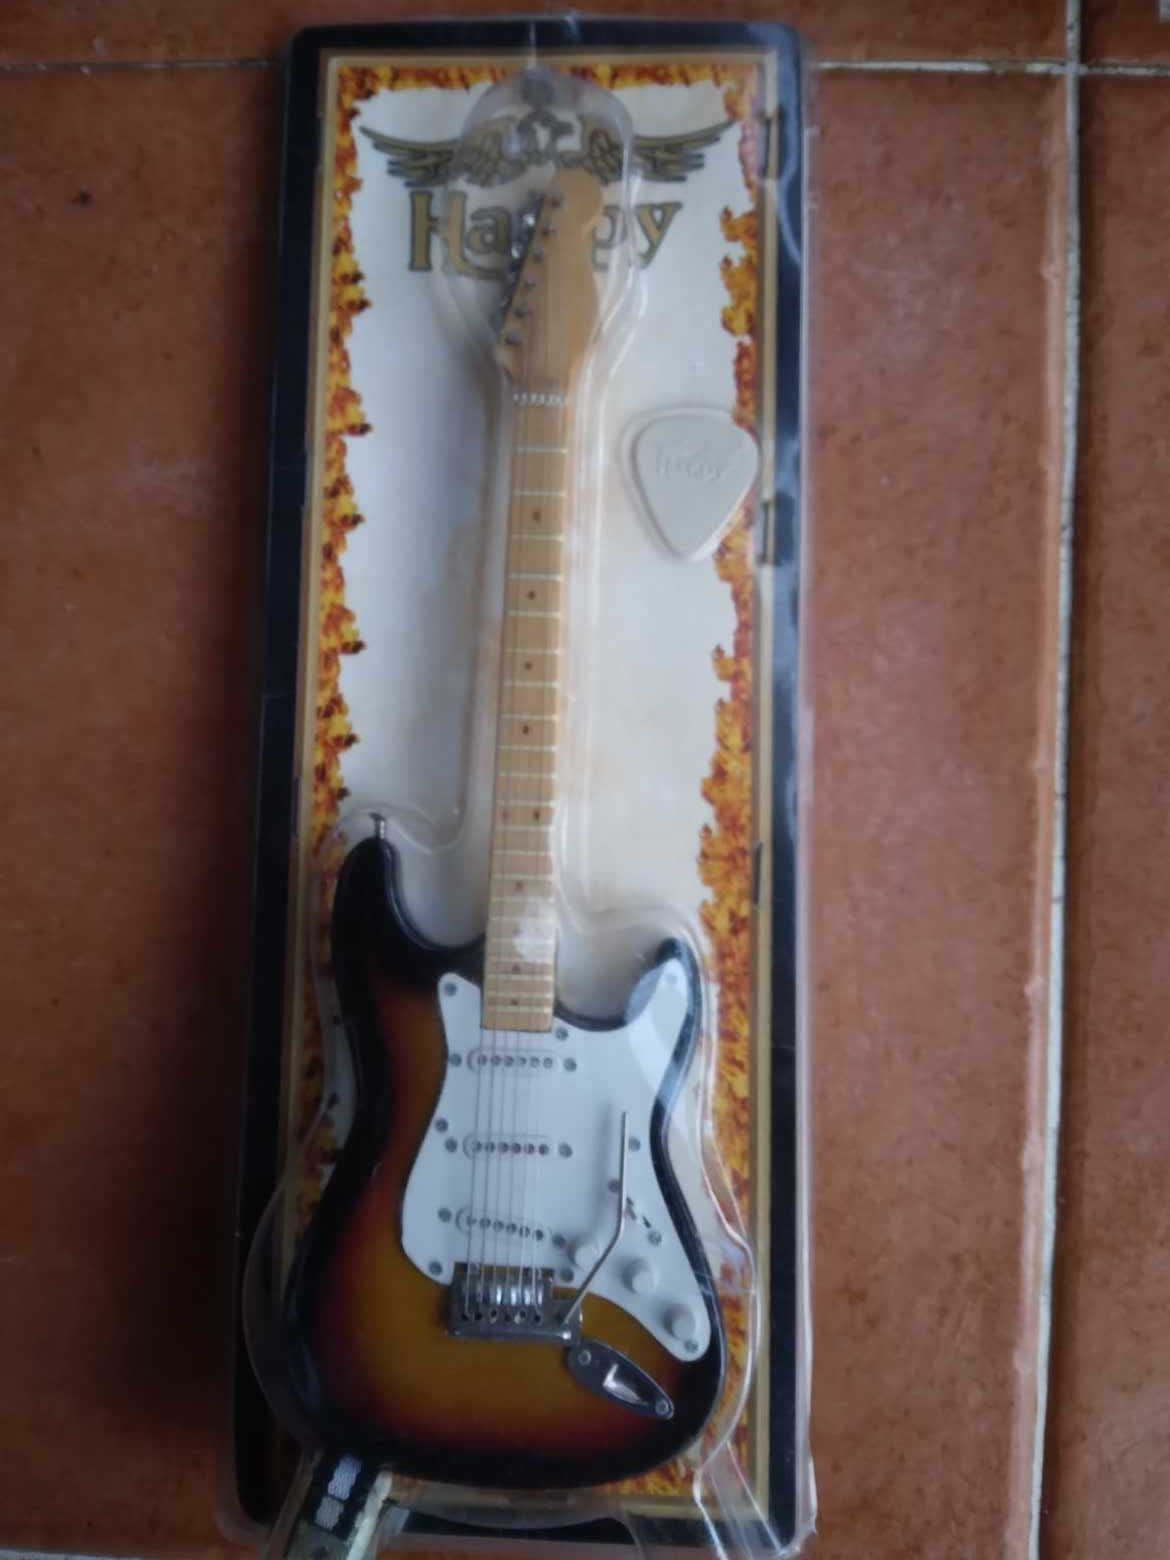 Miniatura Replica Guitarra Strato Escala de 1:4